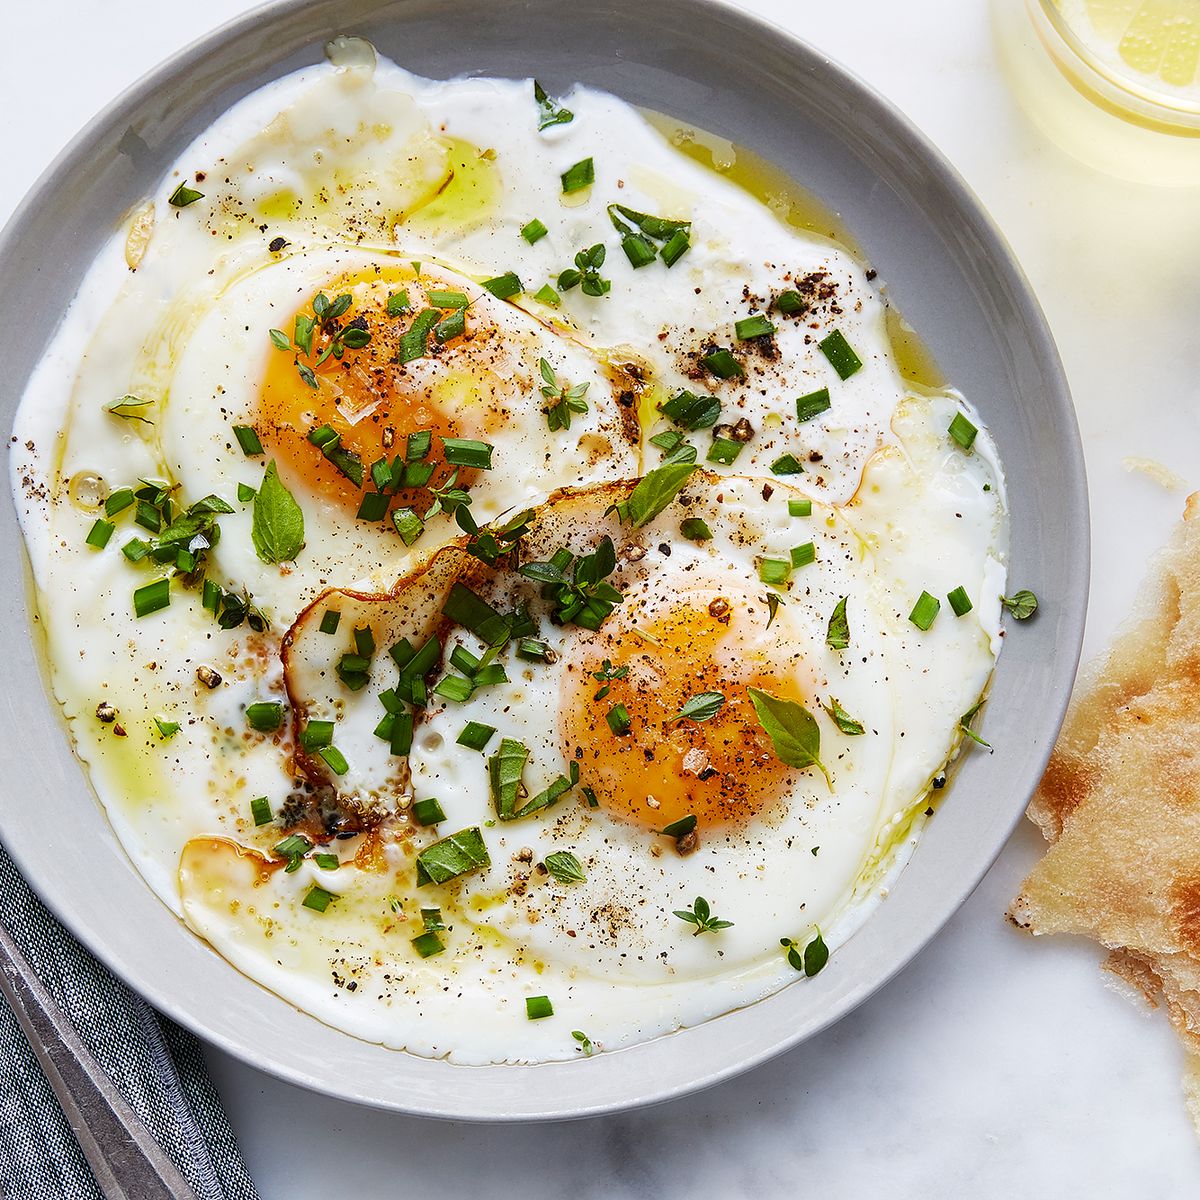 Best Eggs and Yogurt Recipe - How to Make Fried Eggs with Lemon Yogurt